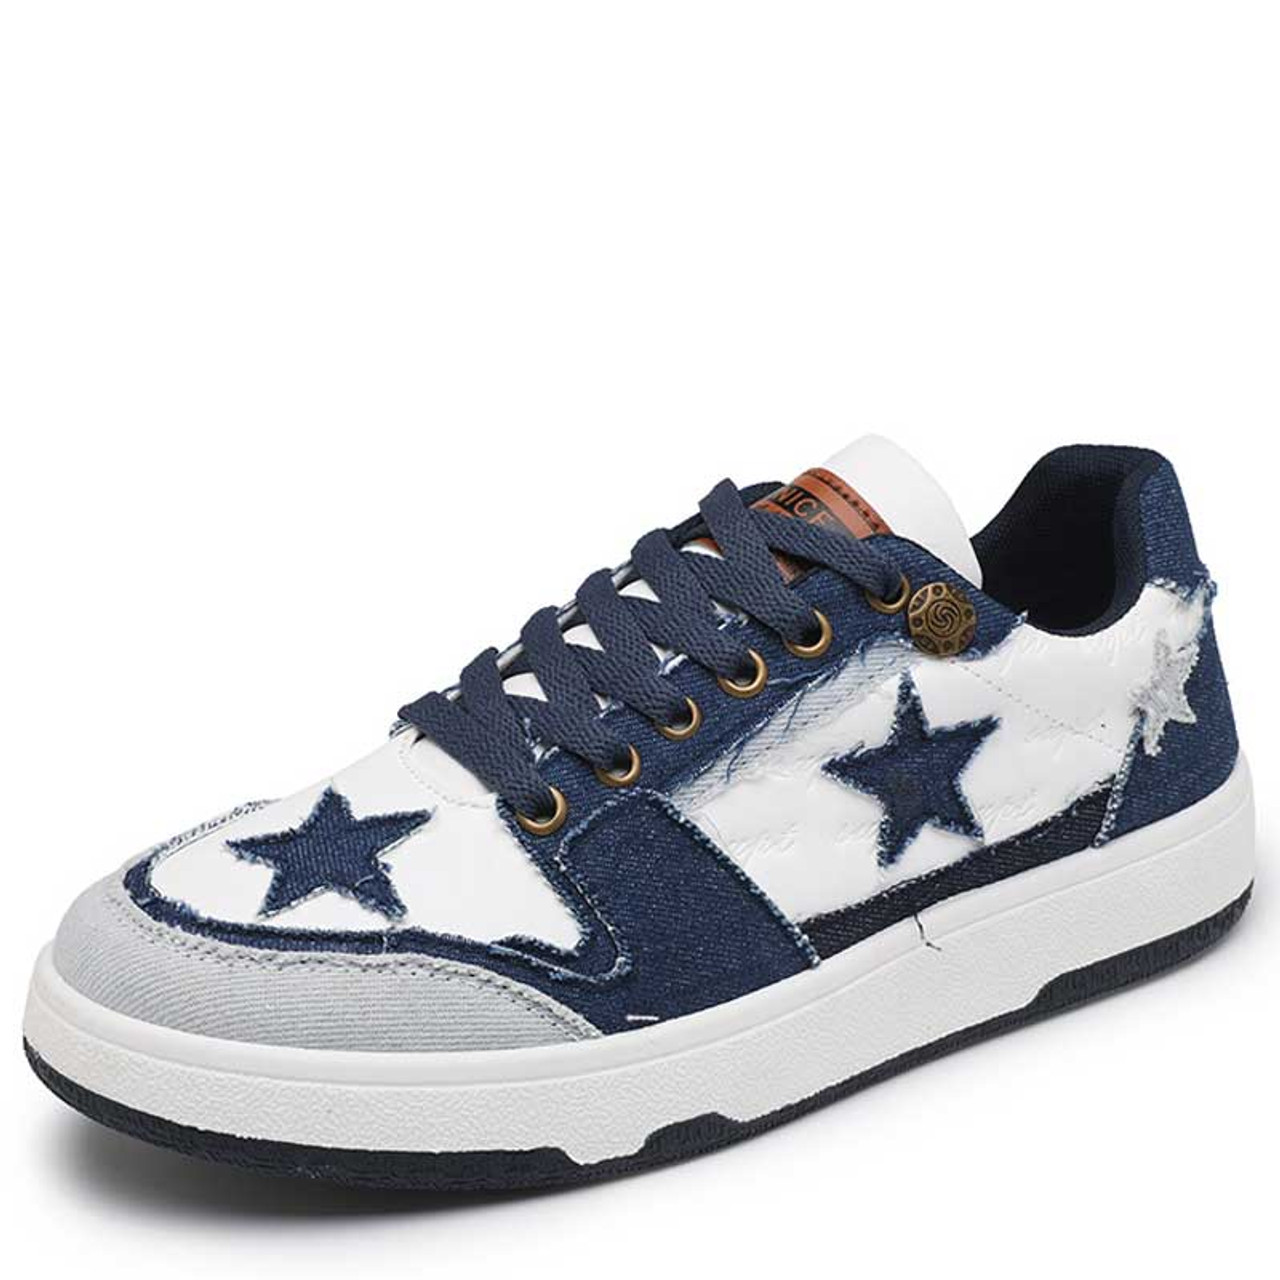 Blue star pattern & prints lace up shoe sneaker